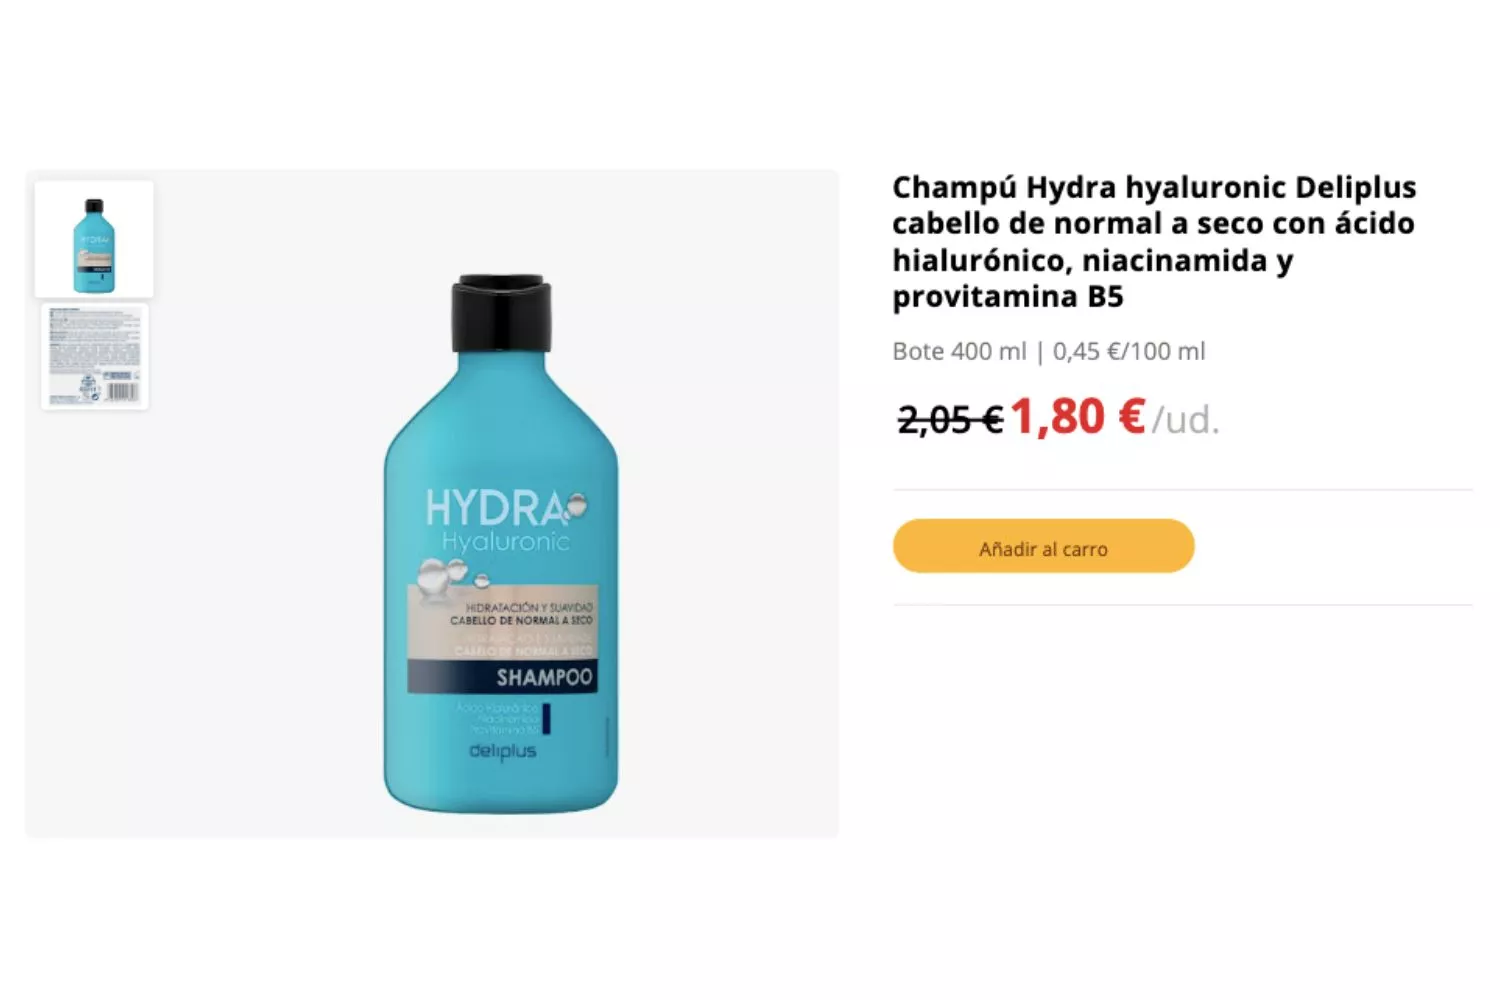 Champú Hydra hyaluronic Deliplus / MERCADONA